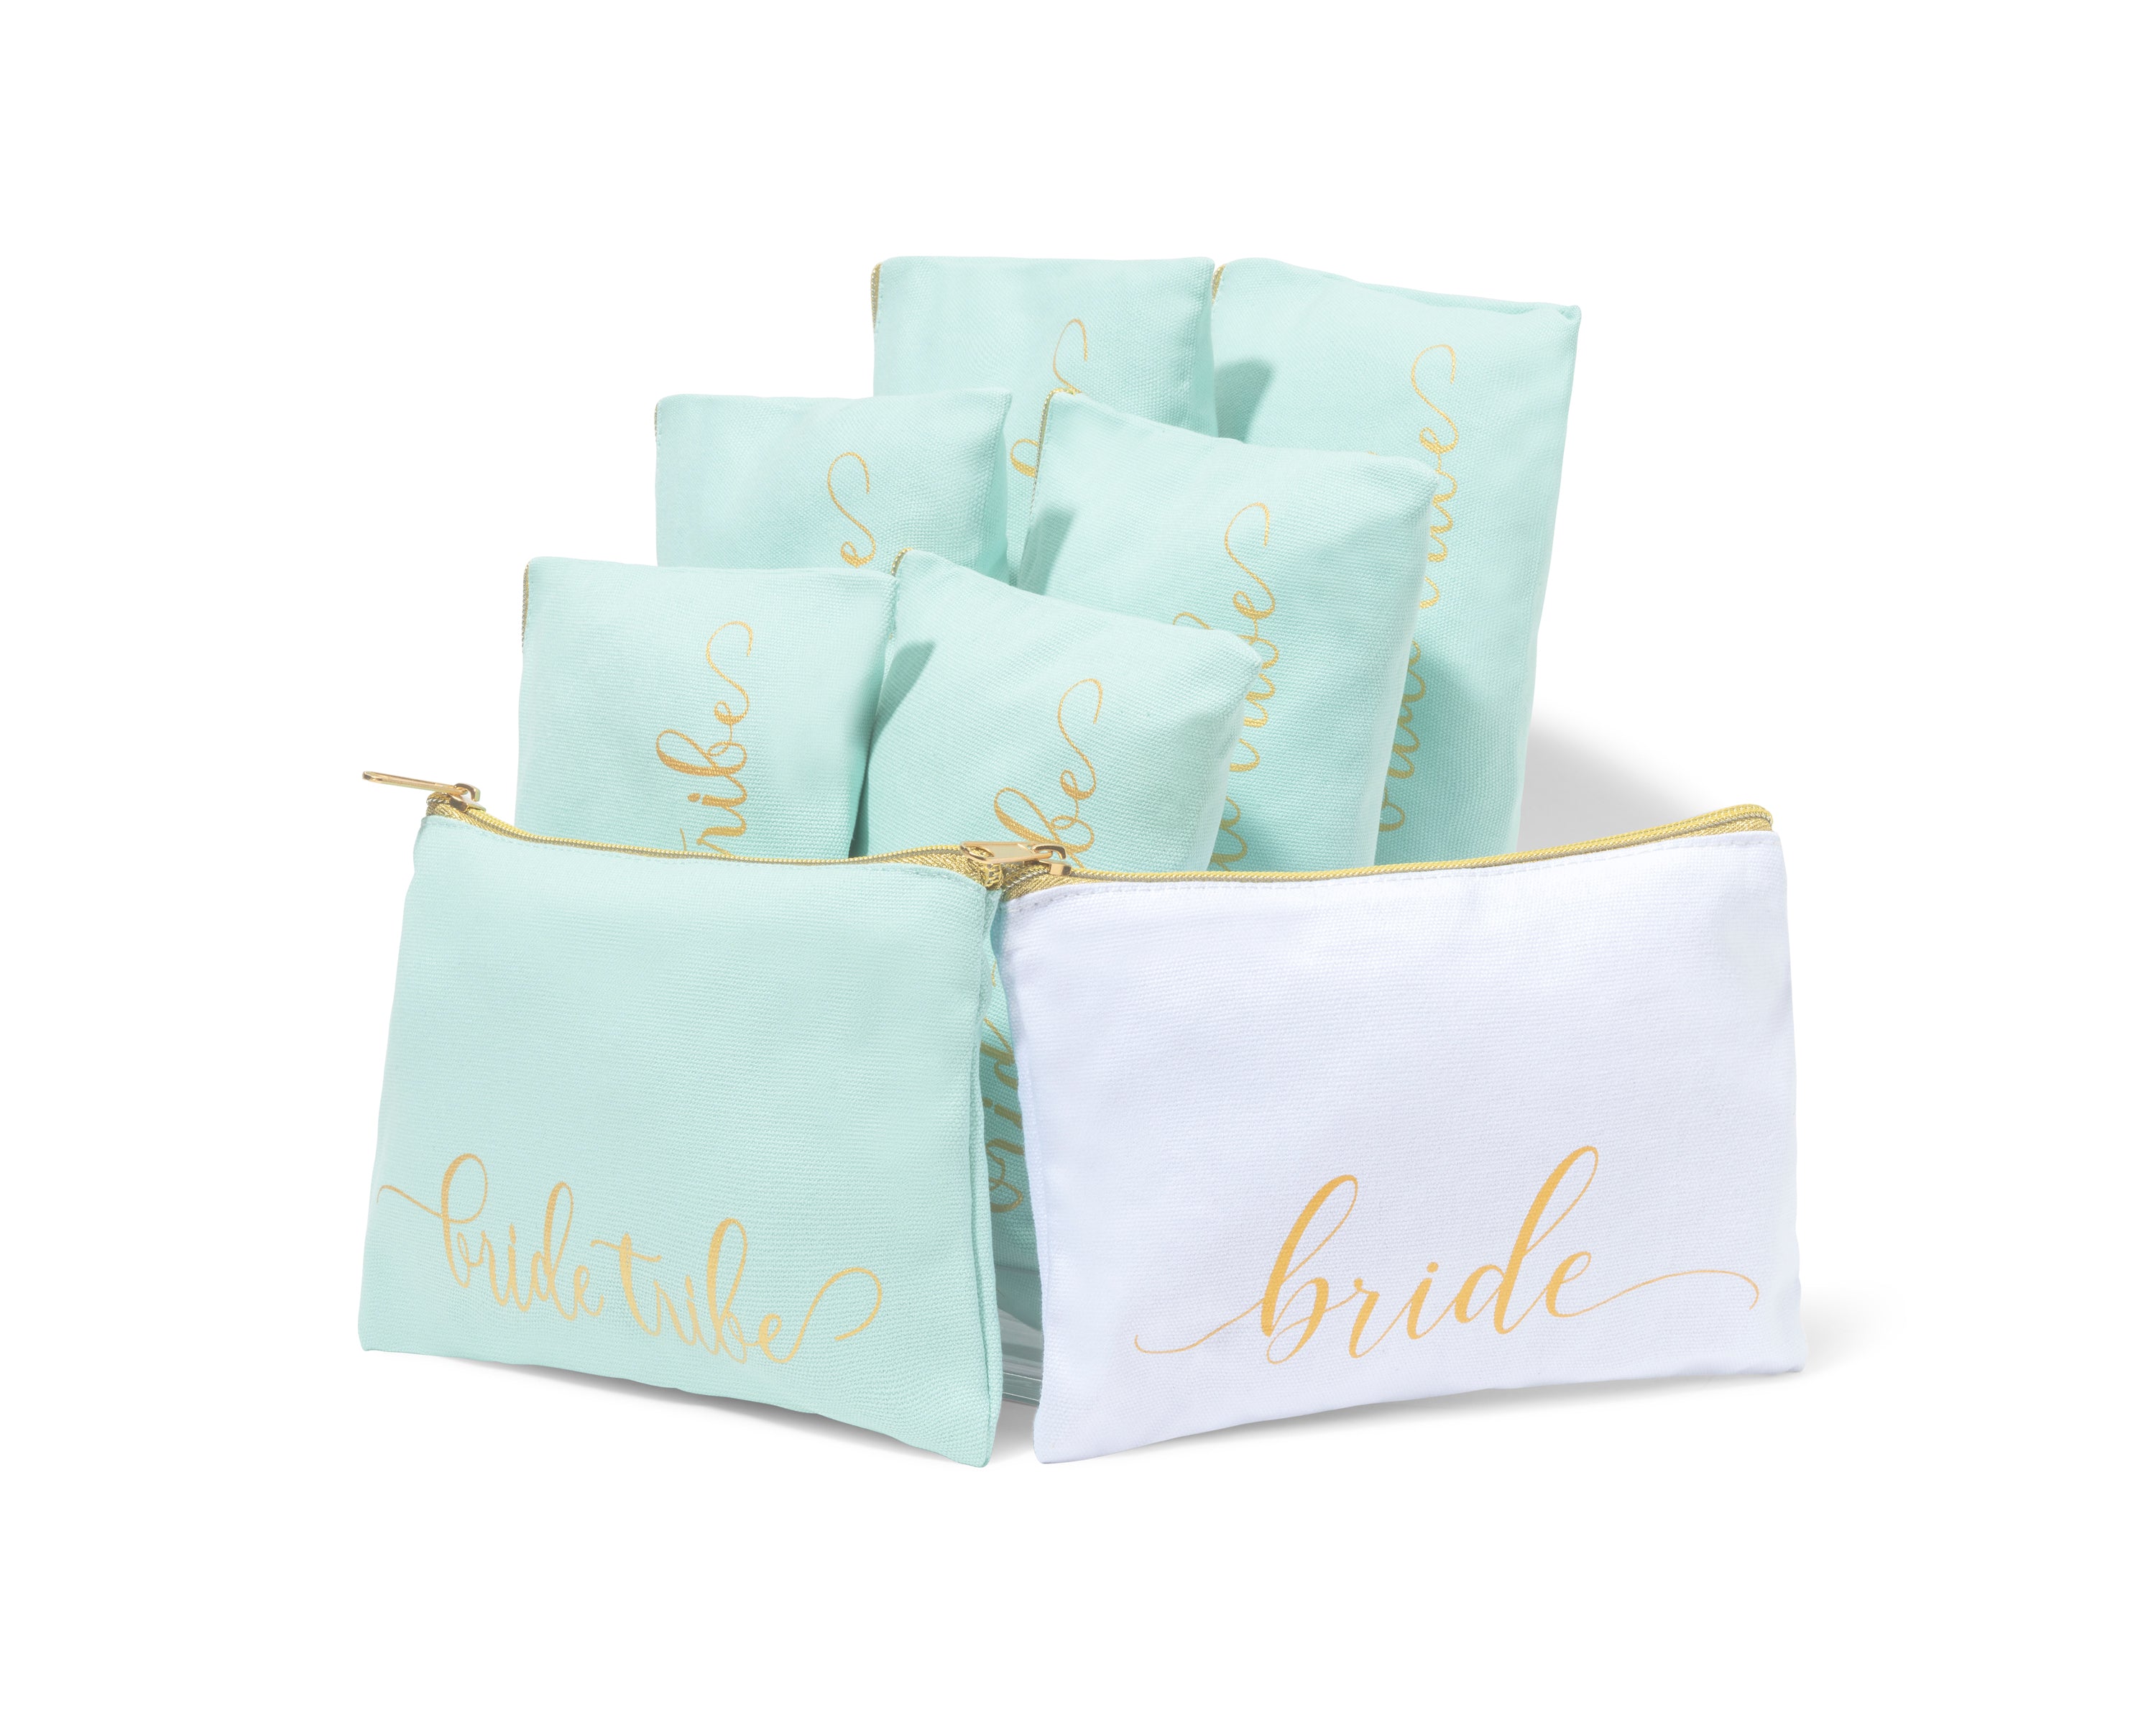 CARAKNOTS Bridesmaid Proposal Gifts Set of 8 Bridesmaid Makeup Bag with  Compact Mirror Bridesmaid Gifts Wedding Bridal Bachelorette Party Favor